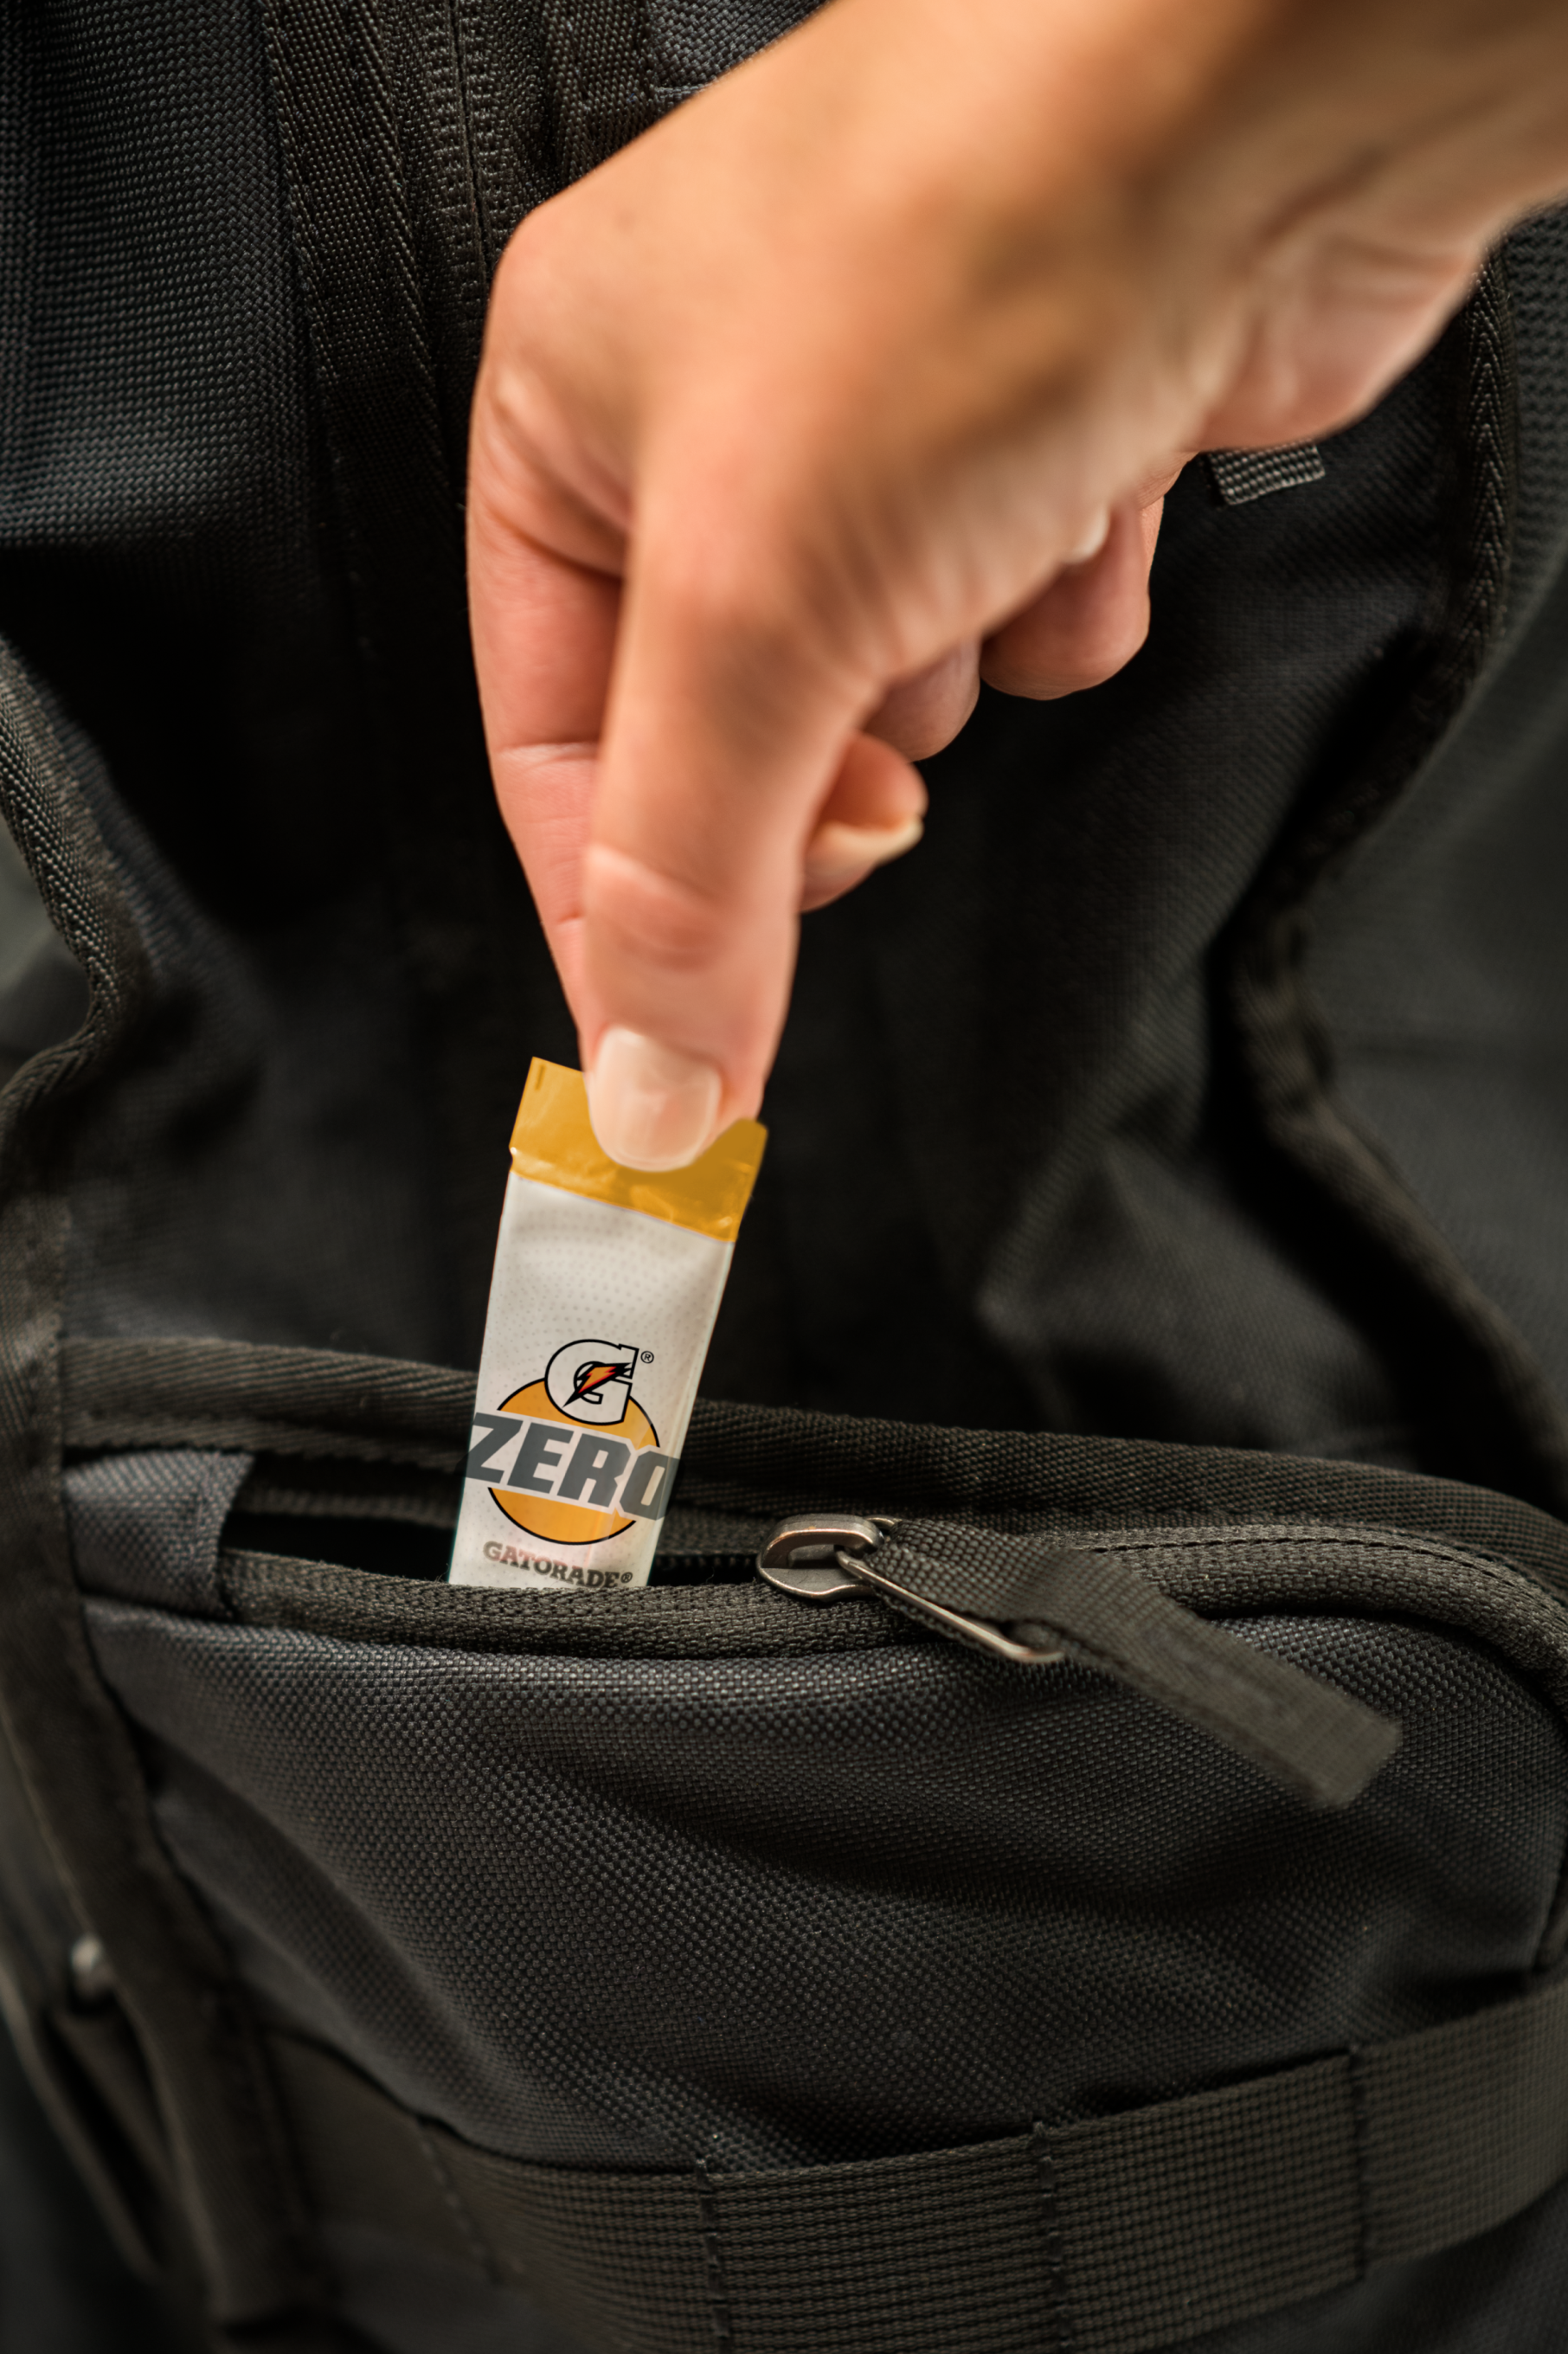 Gatorade zero orange packet